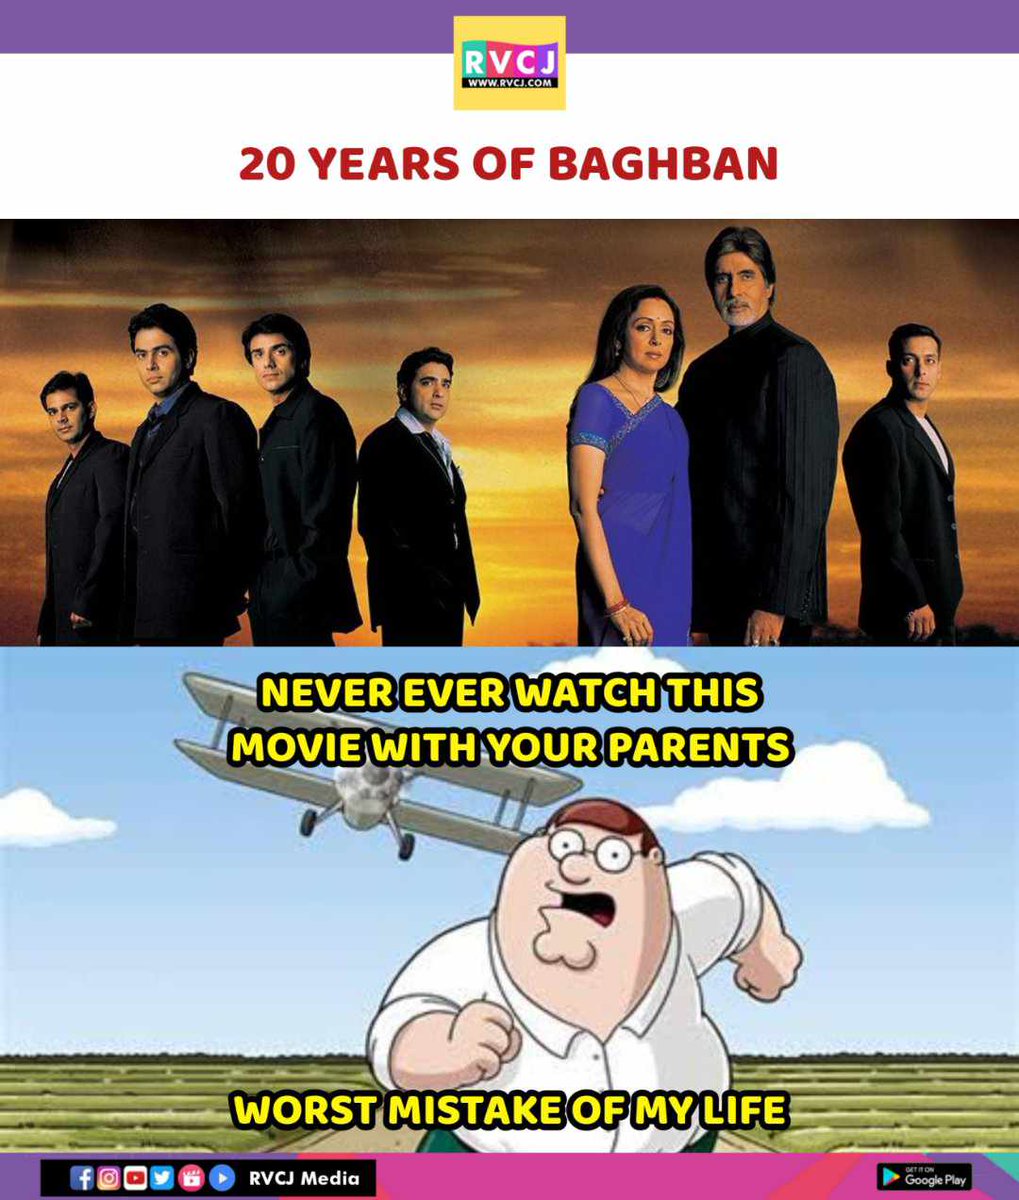 20 years of Baghban

#baghban #amitabhbachchan #hemamalini #mahimachaudhry #amanverma #rimisen #pareshrawal #samirsoni #rvcjinsta #rvcjmovies